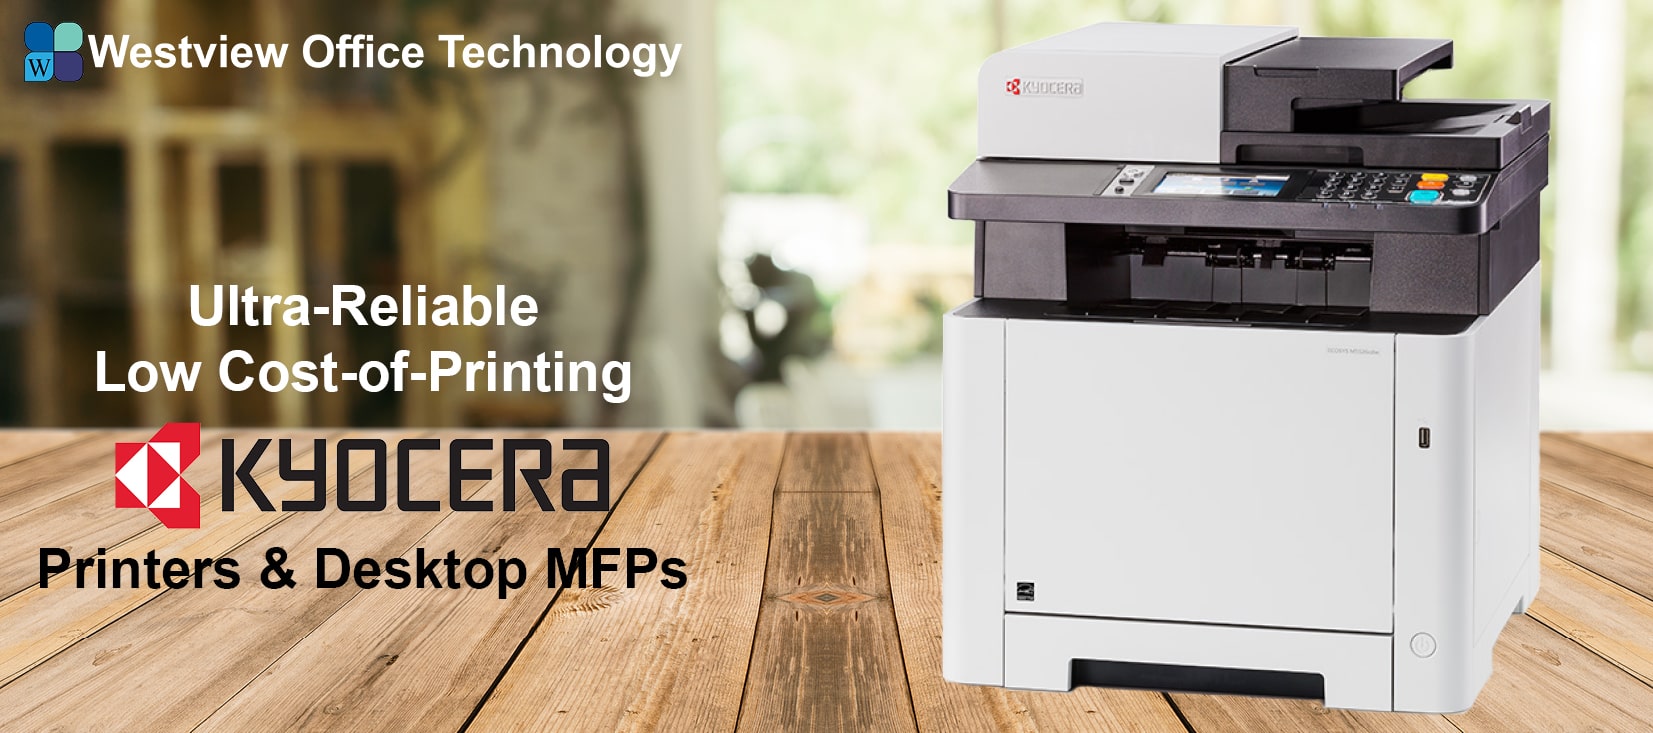 Kyocera desktop printers and MFPs